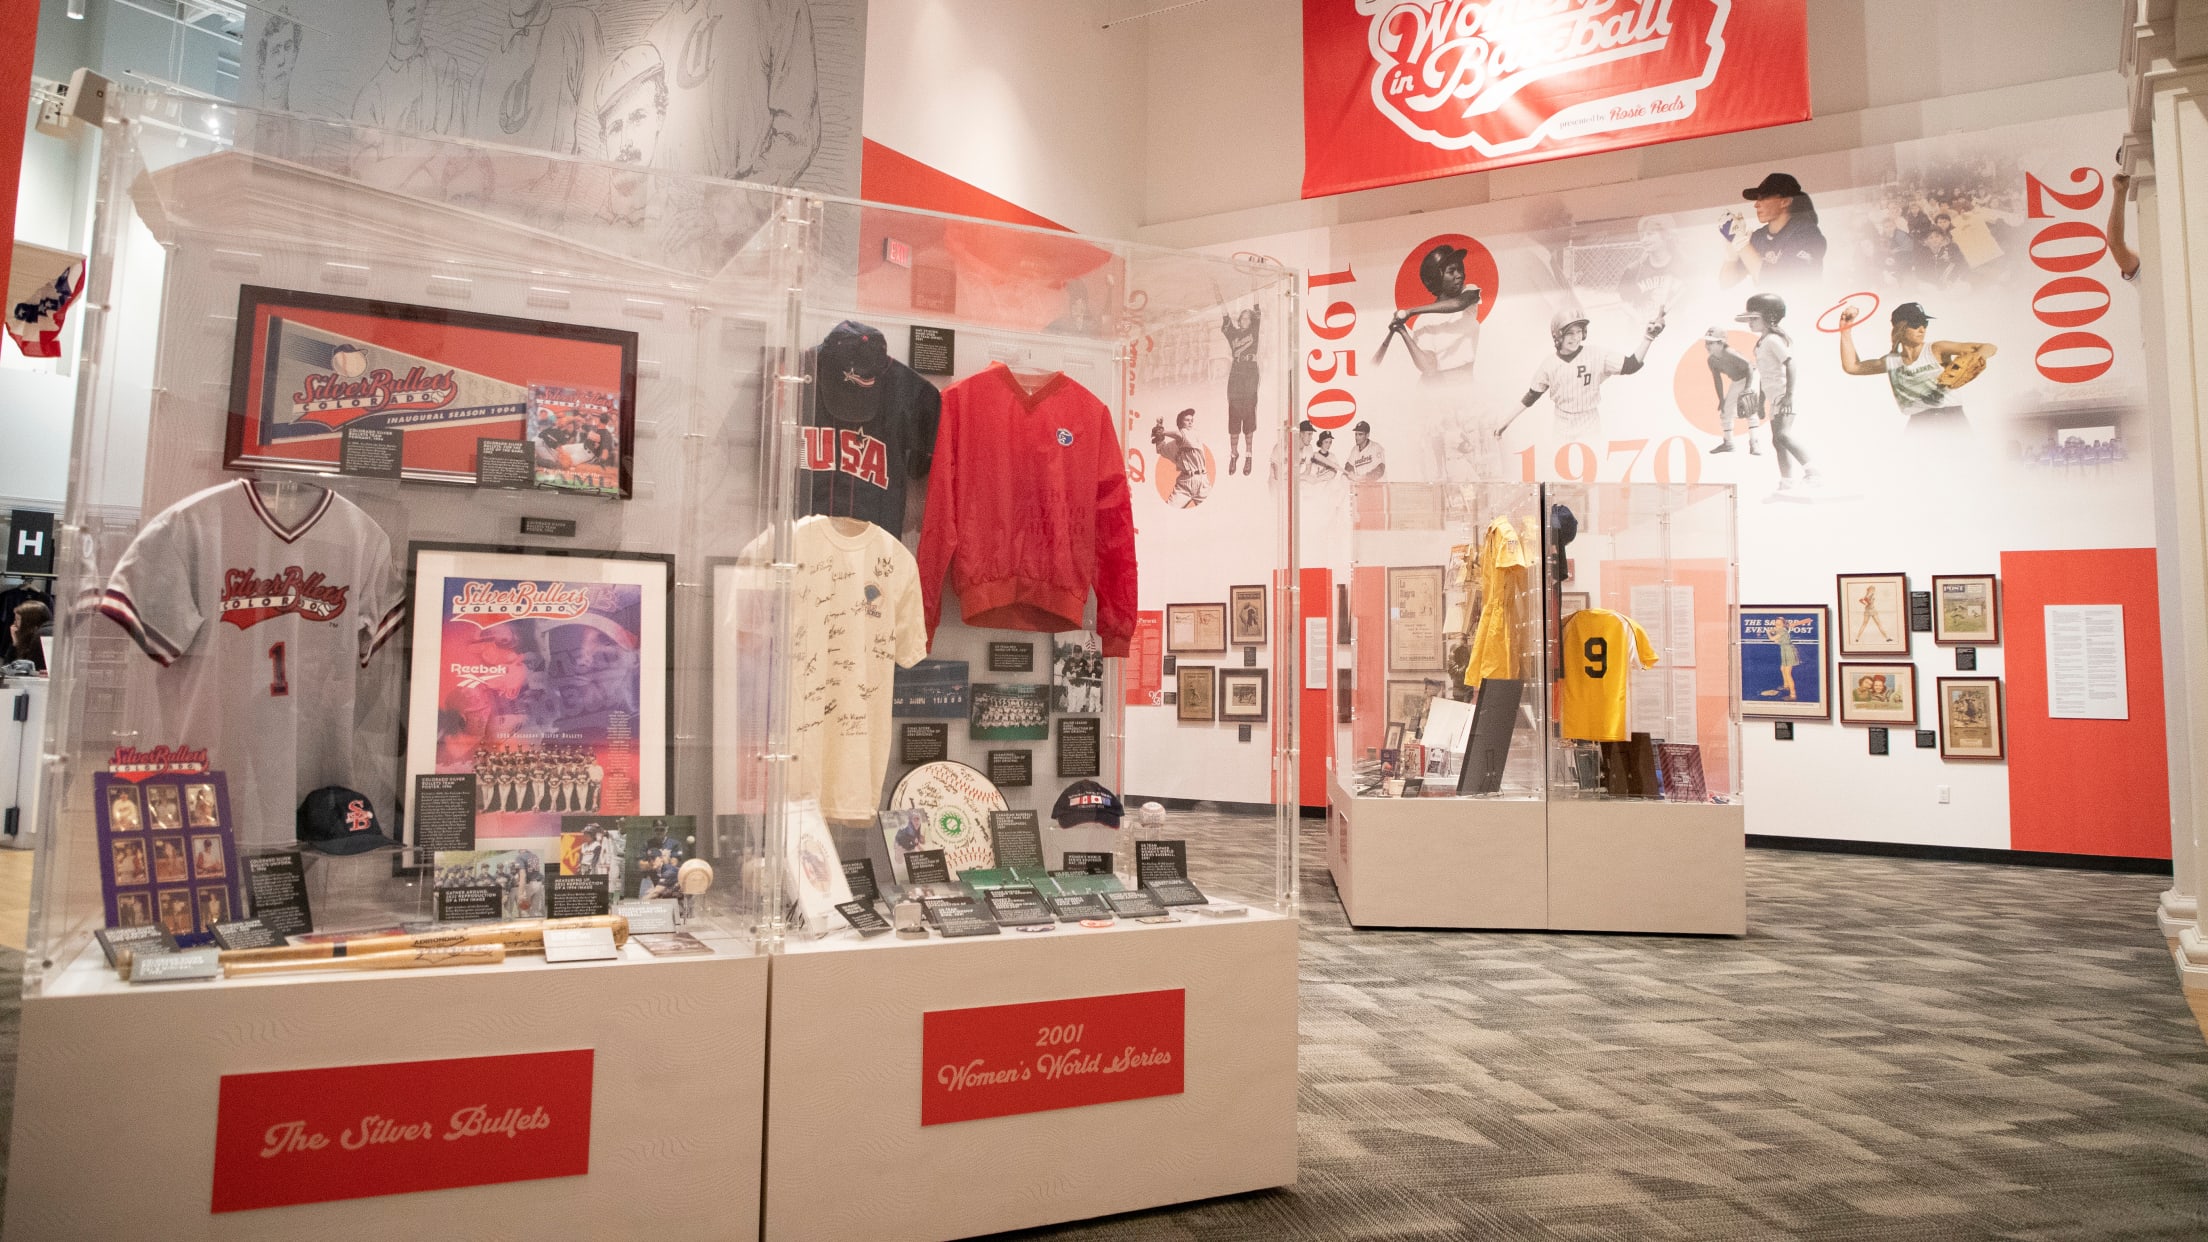 Cincinnati Reds Hall of Fame and Museum: Look inside renovation